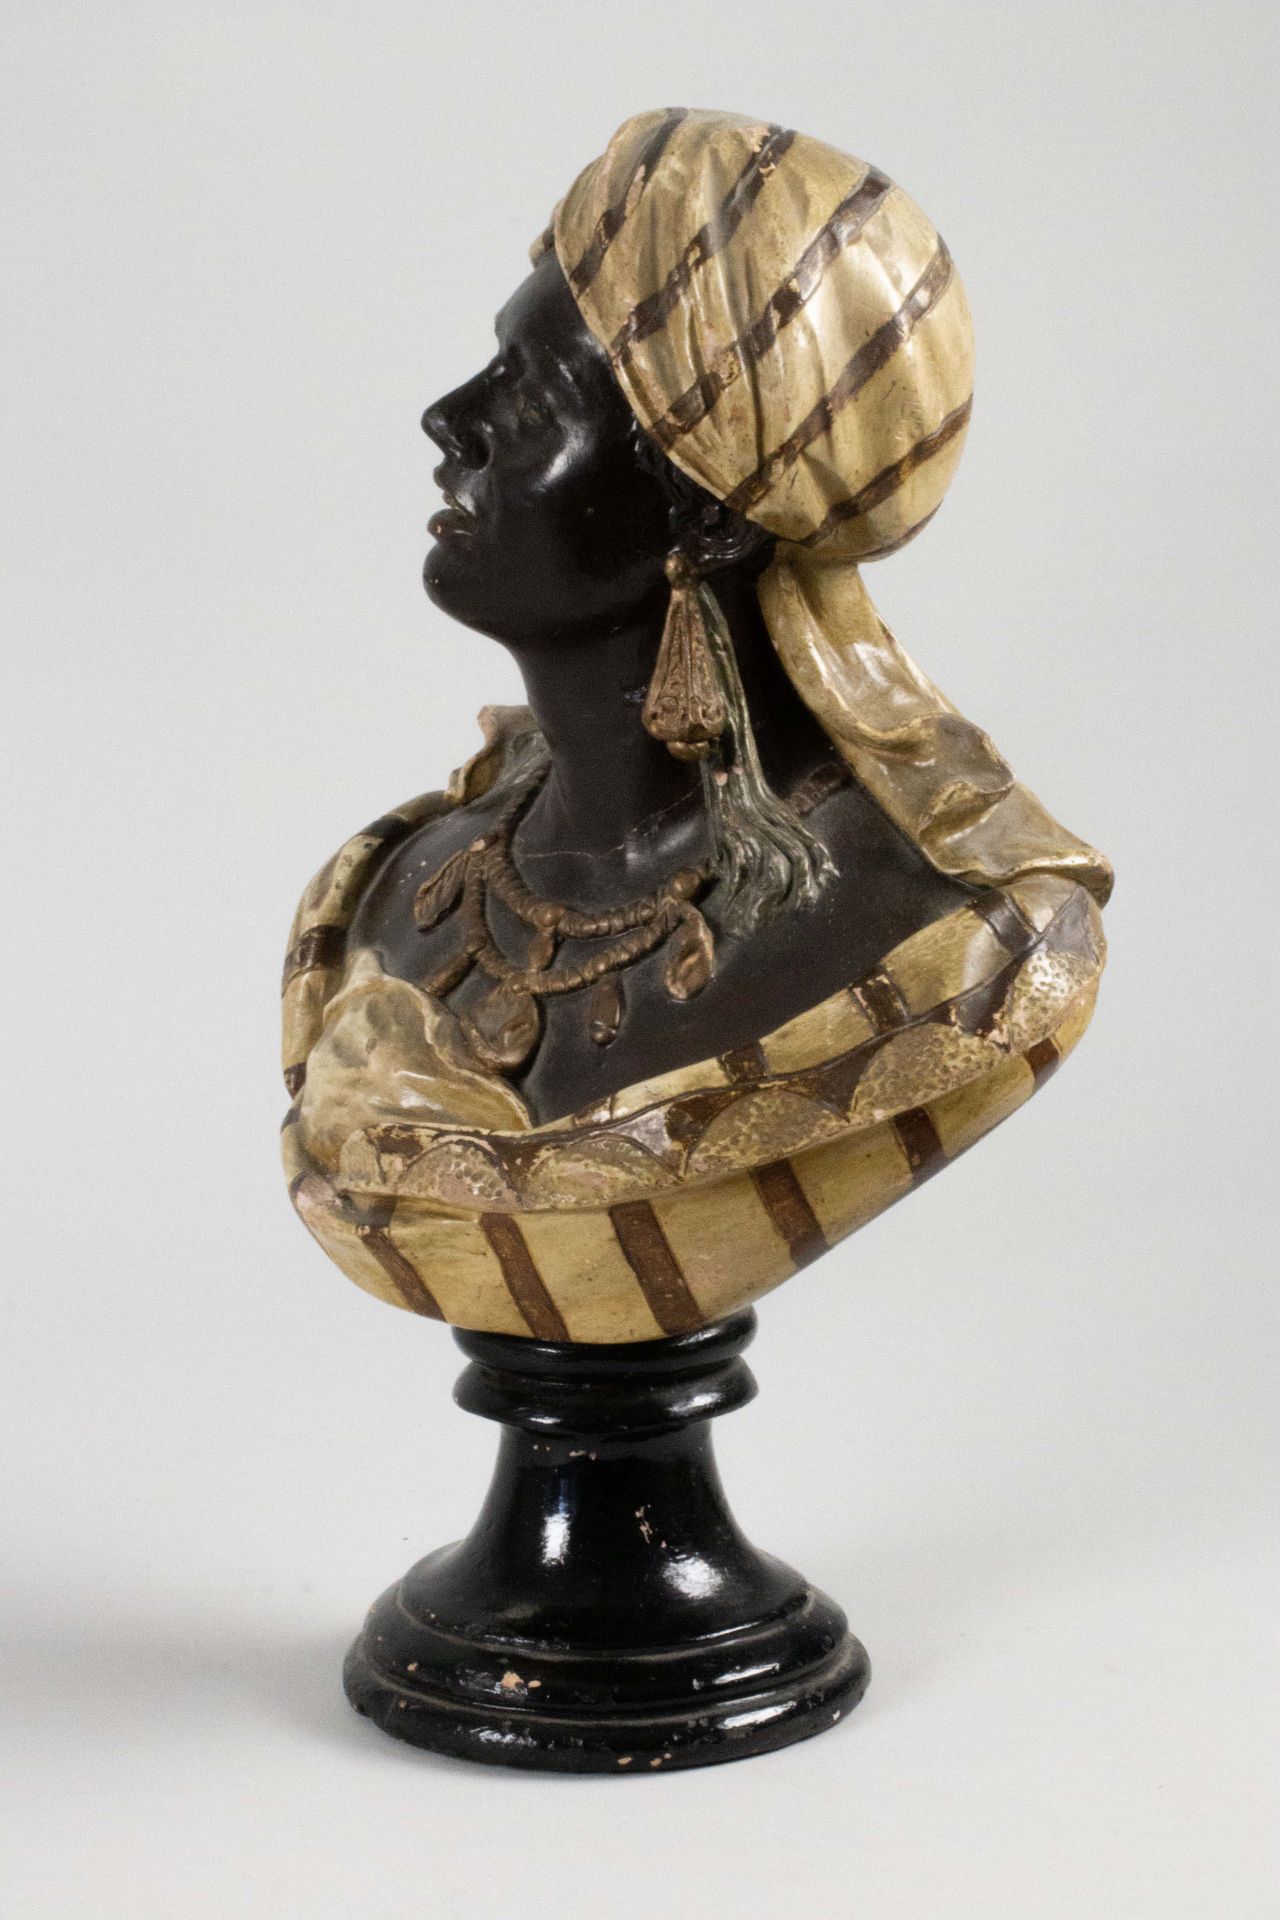 Keramikbüste 'Orientalin' / A ceramic bust of an 'Oriental lady', 1920er Jahre - Image 3 of 7